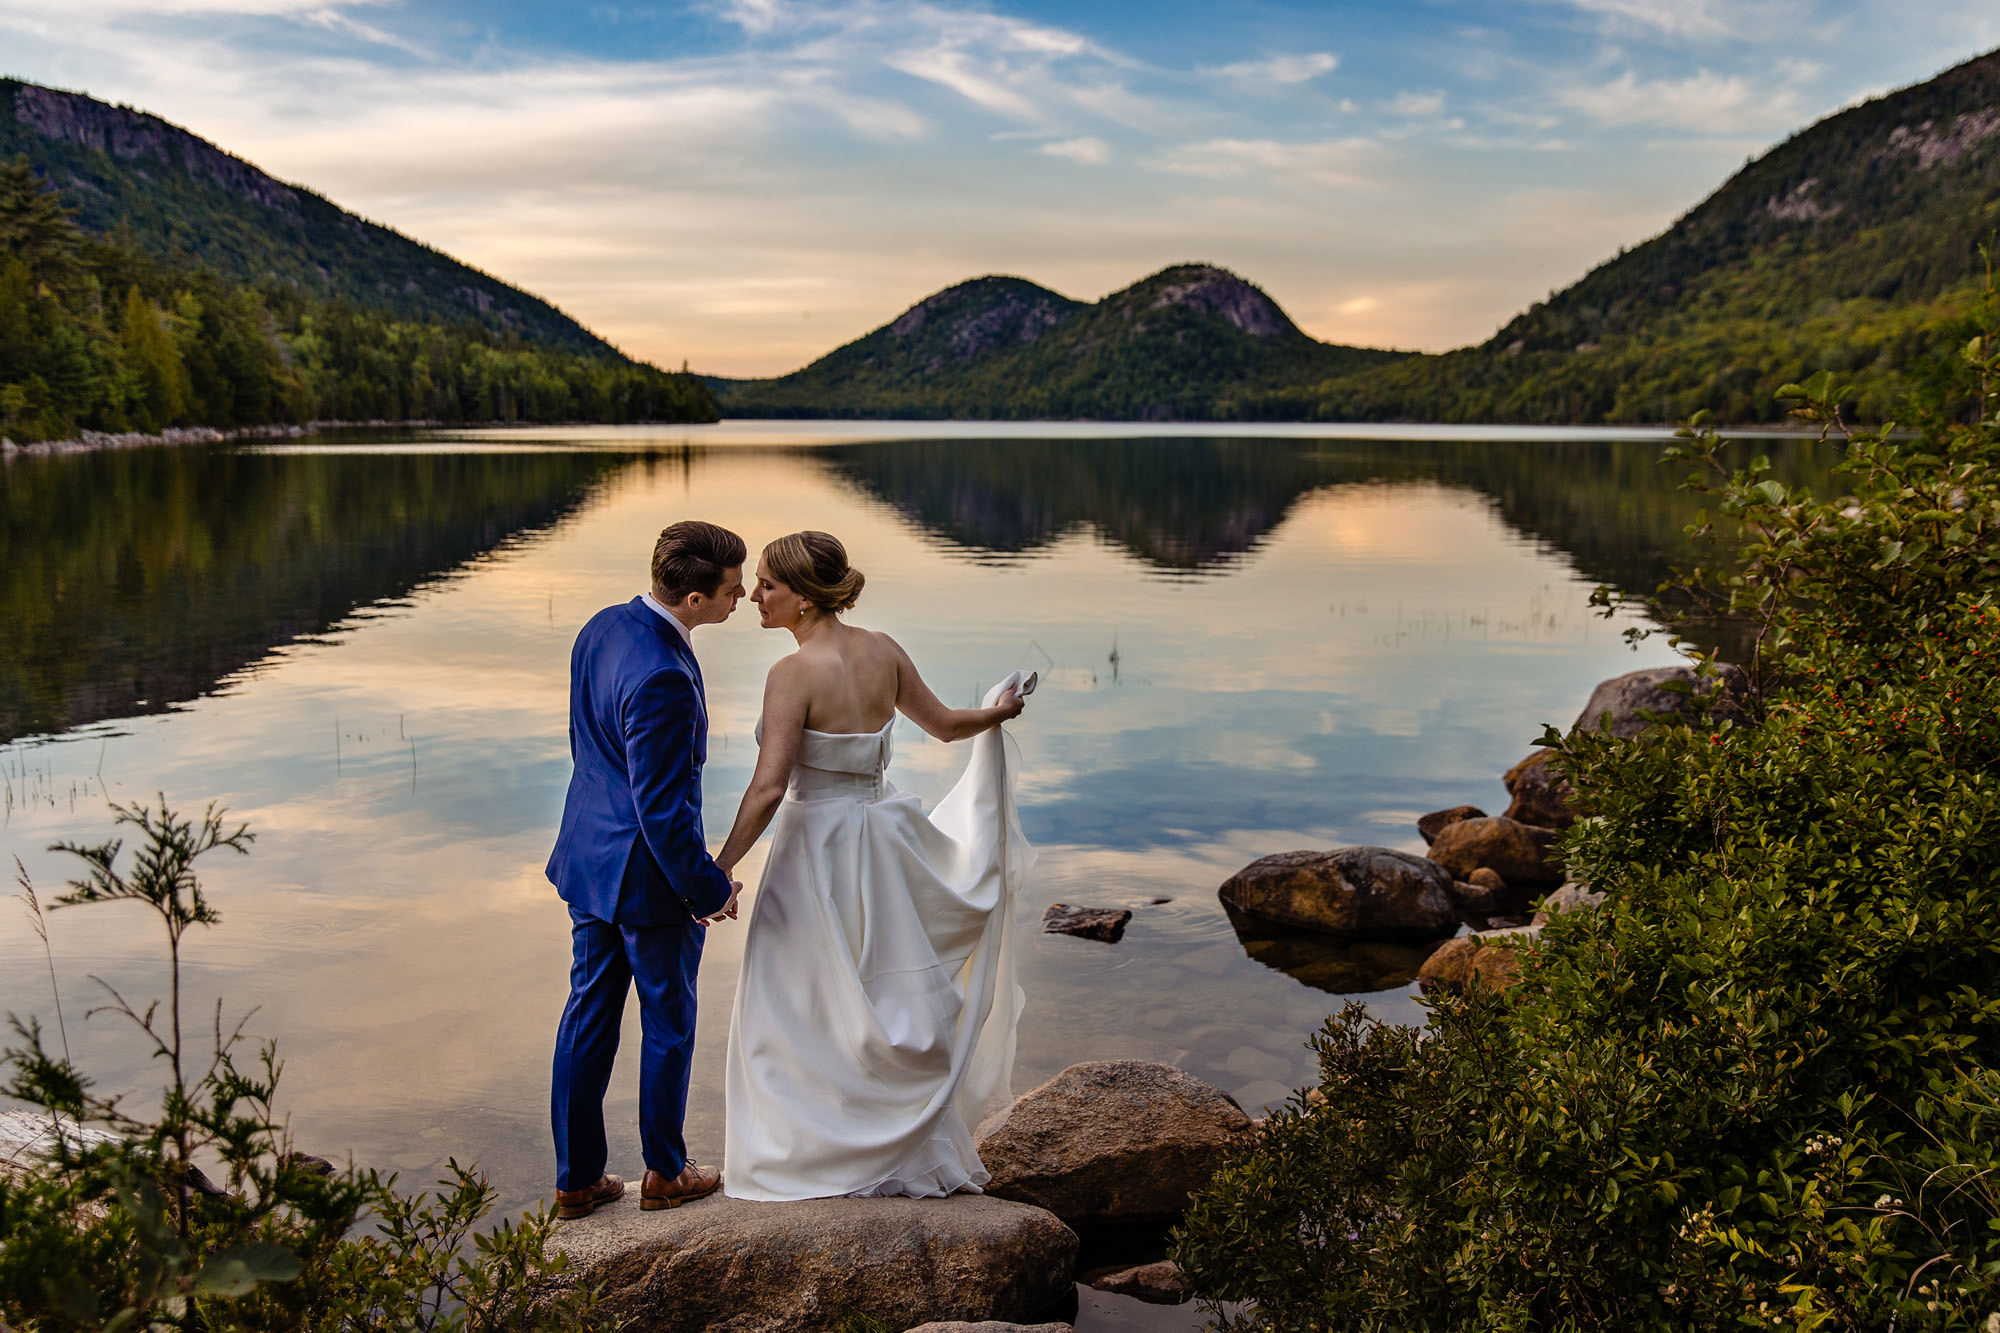 An elopement portrait at Jordan Pond in Acadia National Park.